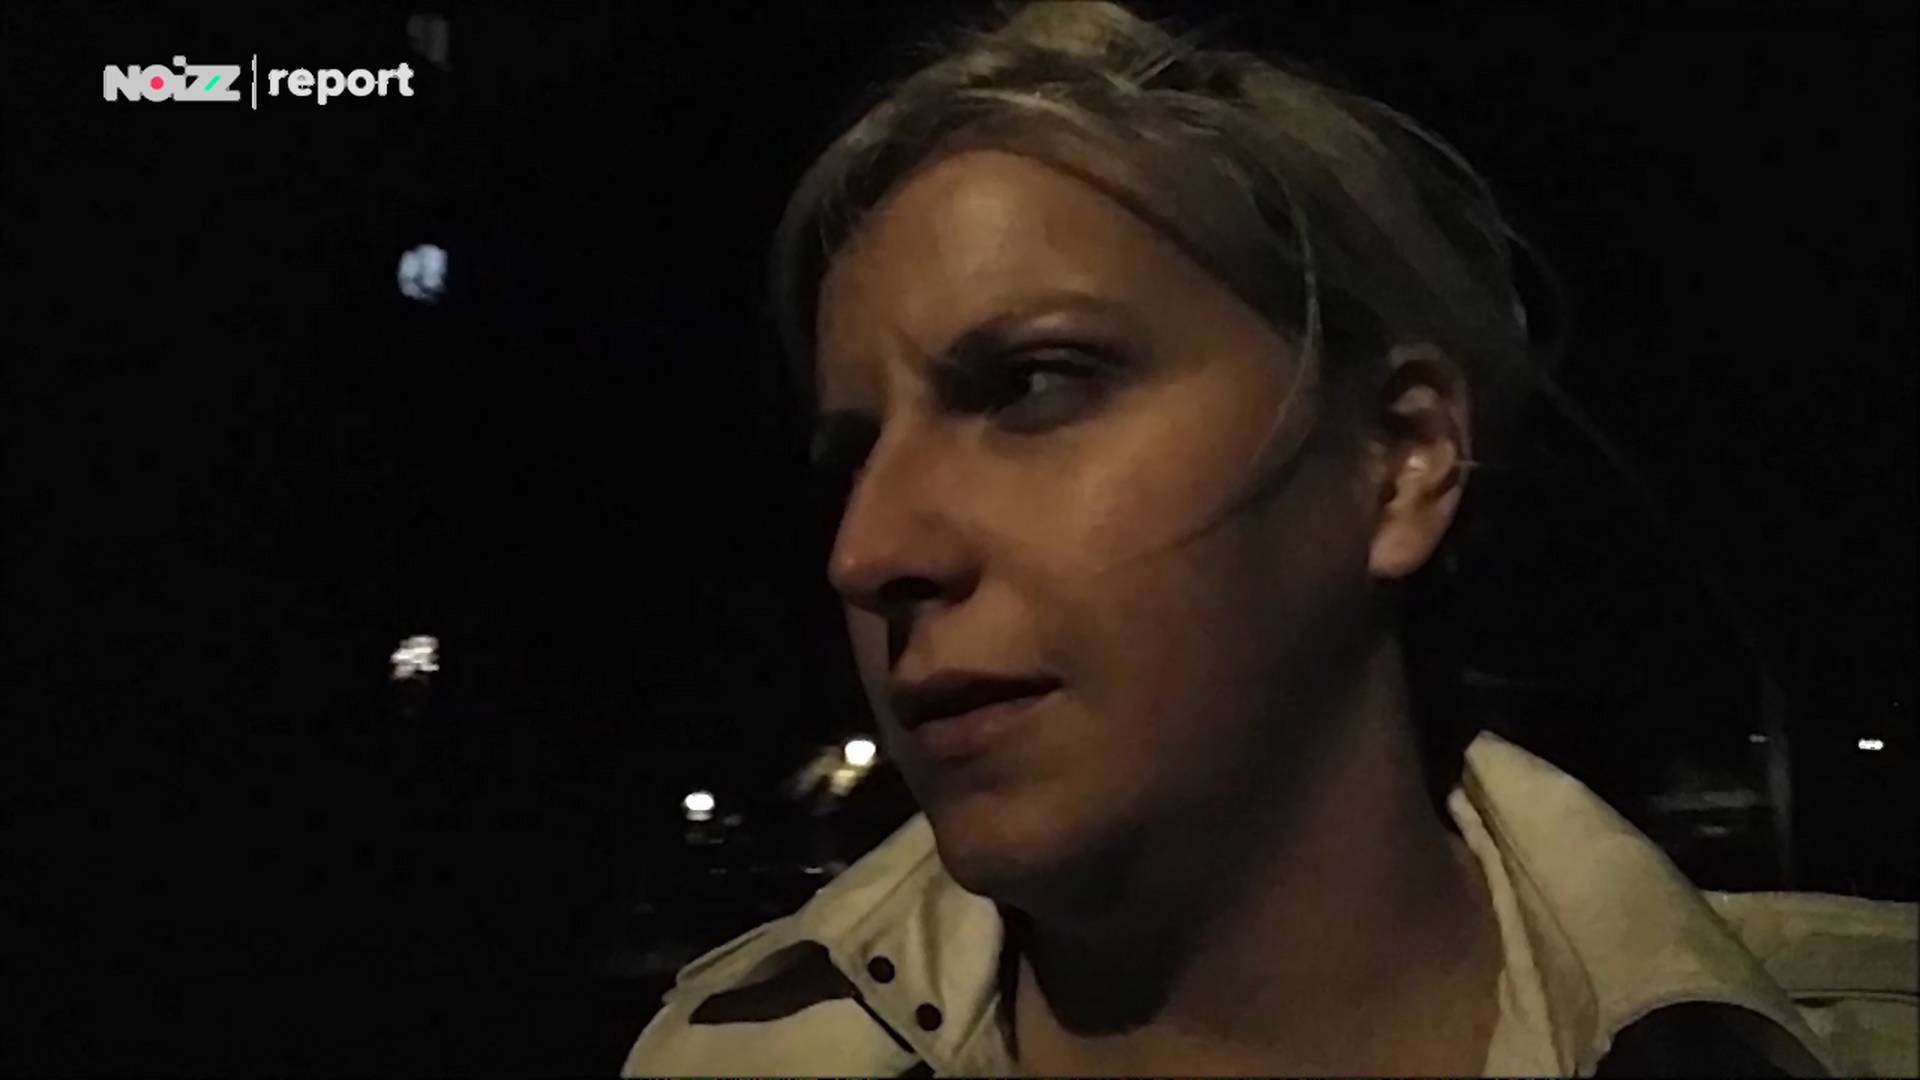 NOIZZ REPORT: Provela sam noć kao beskućnik u Beogradu